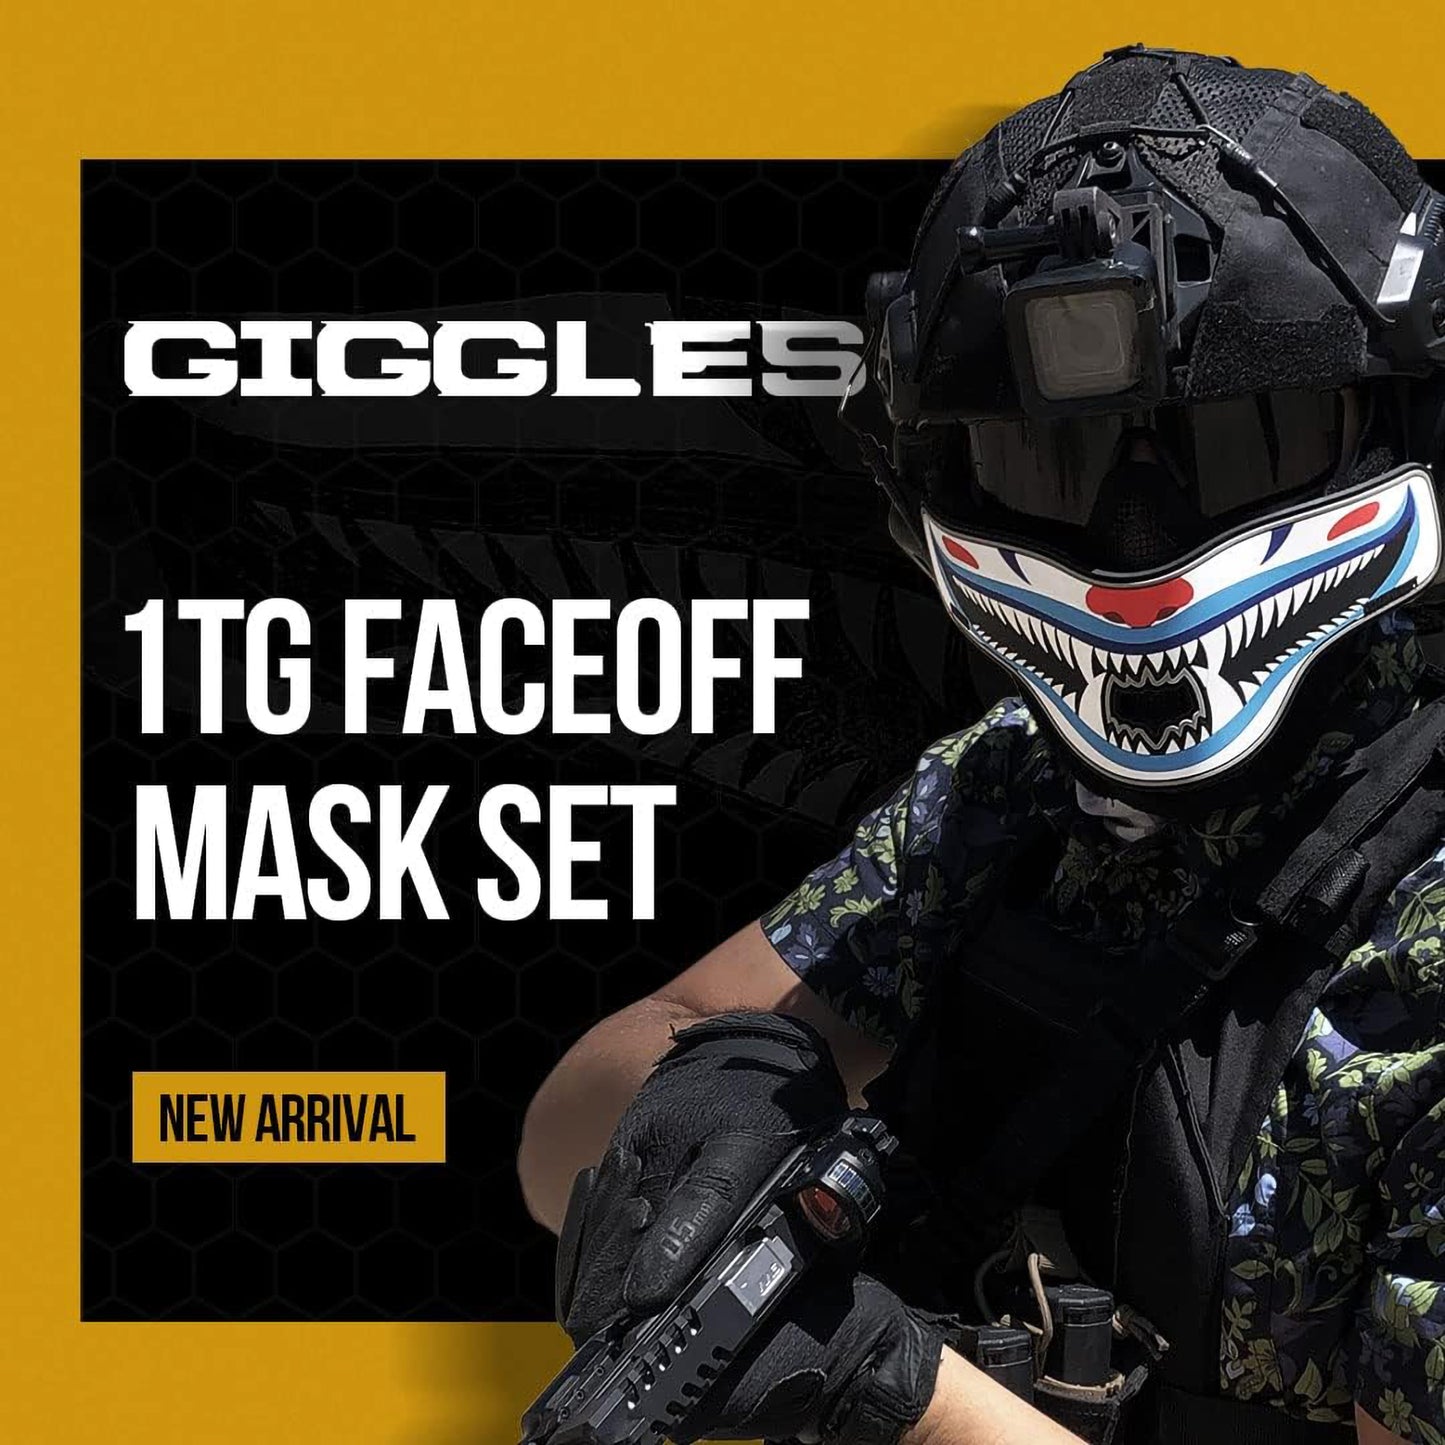 1TG FACEOFF Mask Set